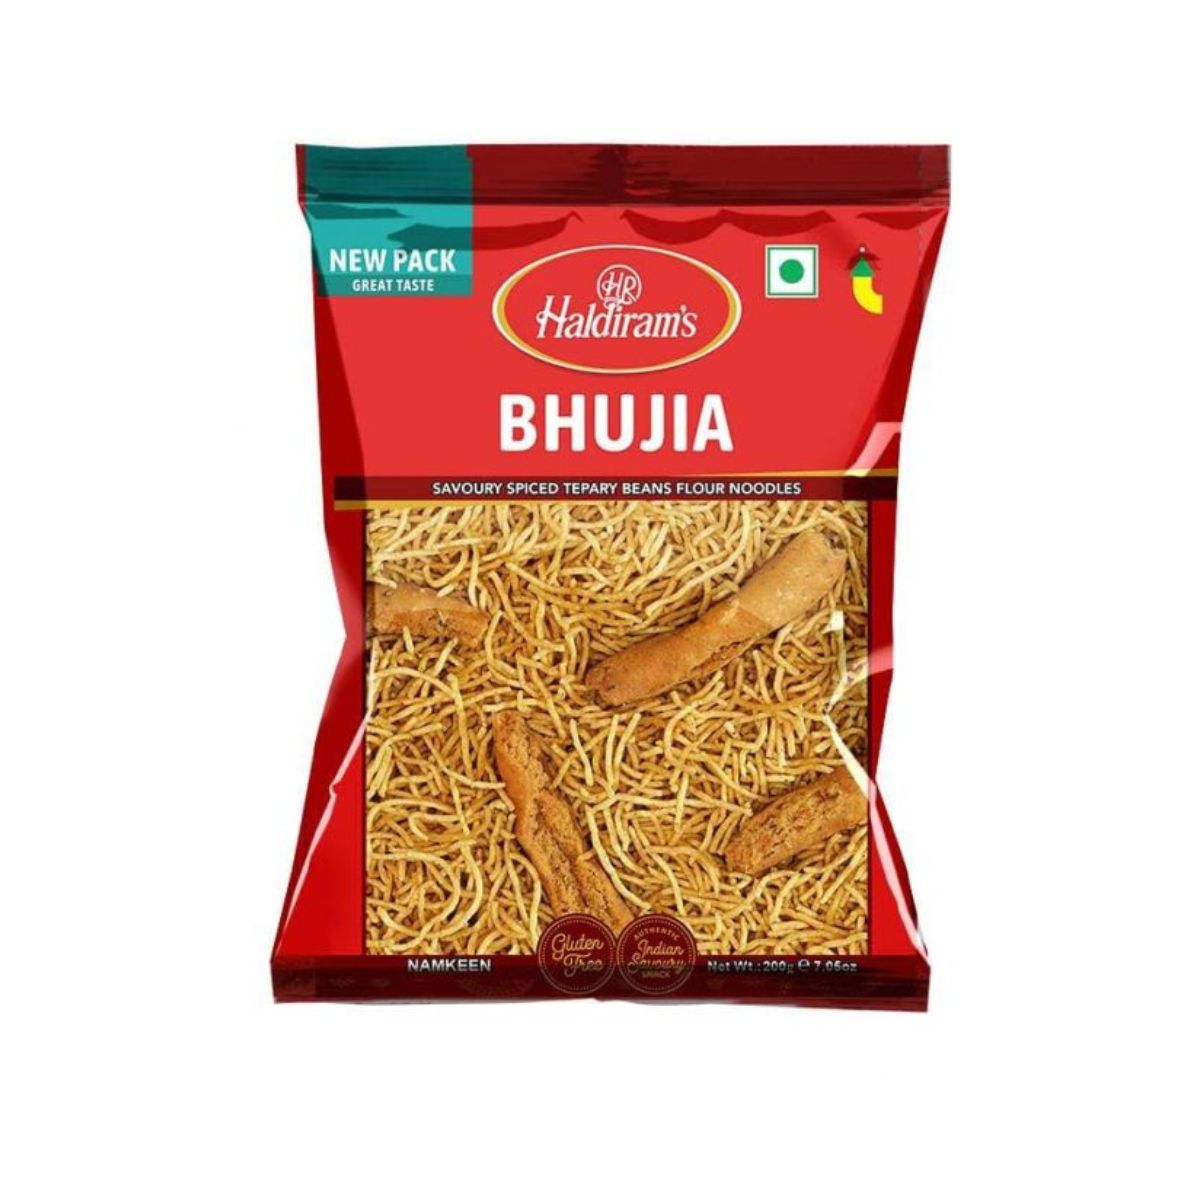 Haldiram's Bhujia - Savoury Spiced Tepary Beans Flour Noodles - 200g